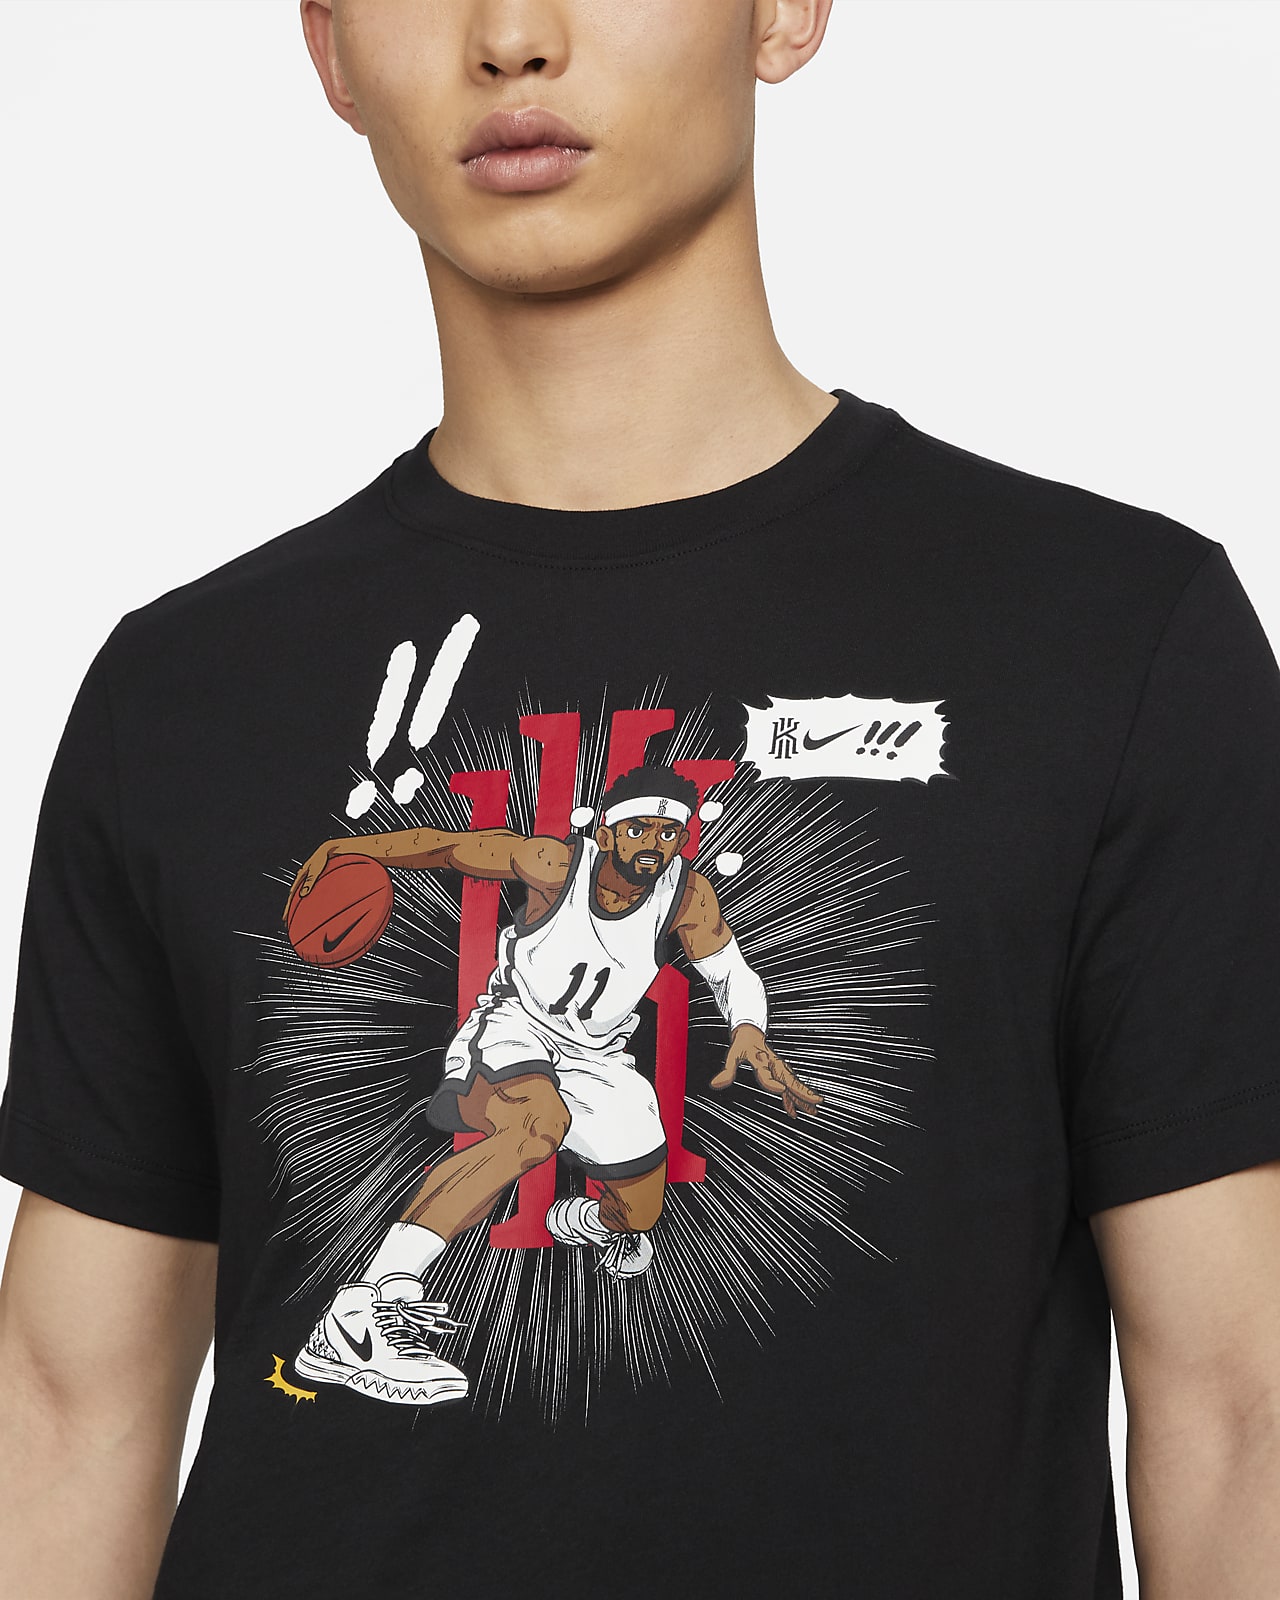 Nike公式 カイリー ロゴ メンズ バスケットボール Tシャツ オンラインストア 通販サイト